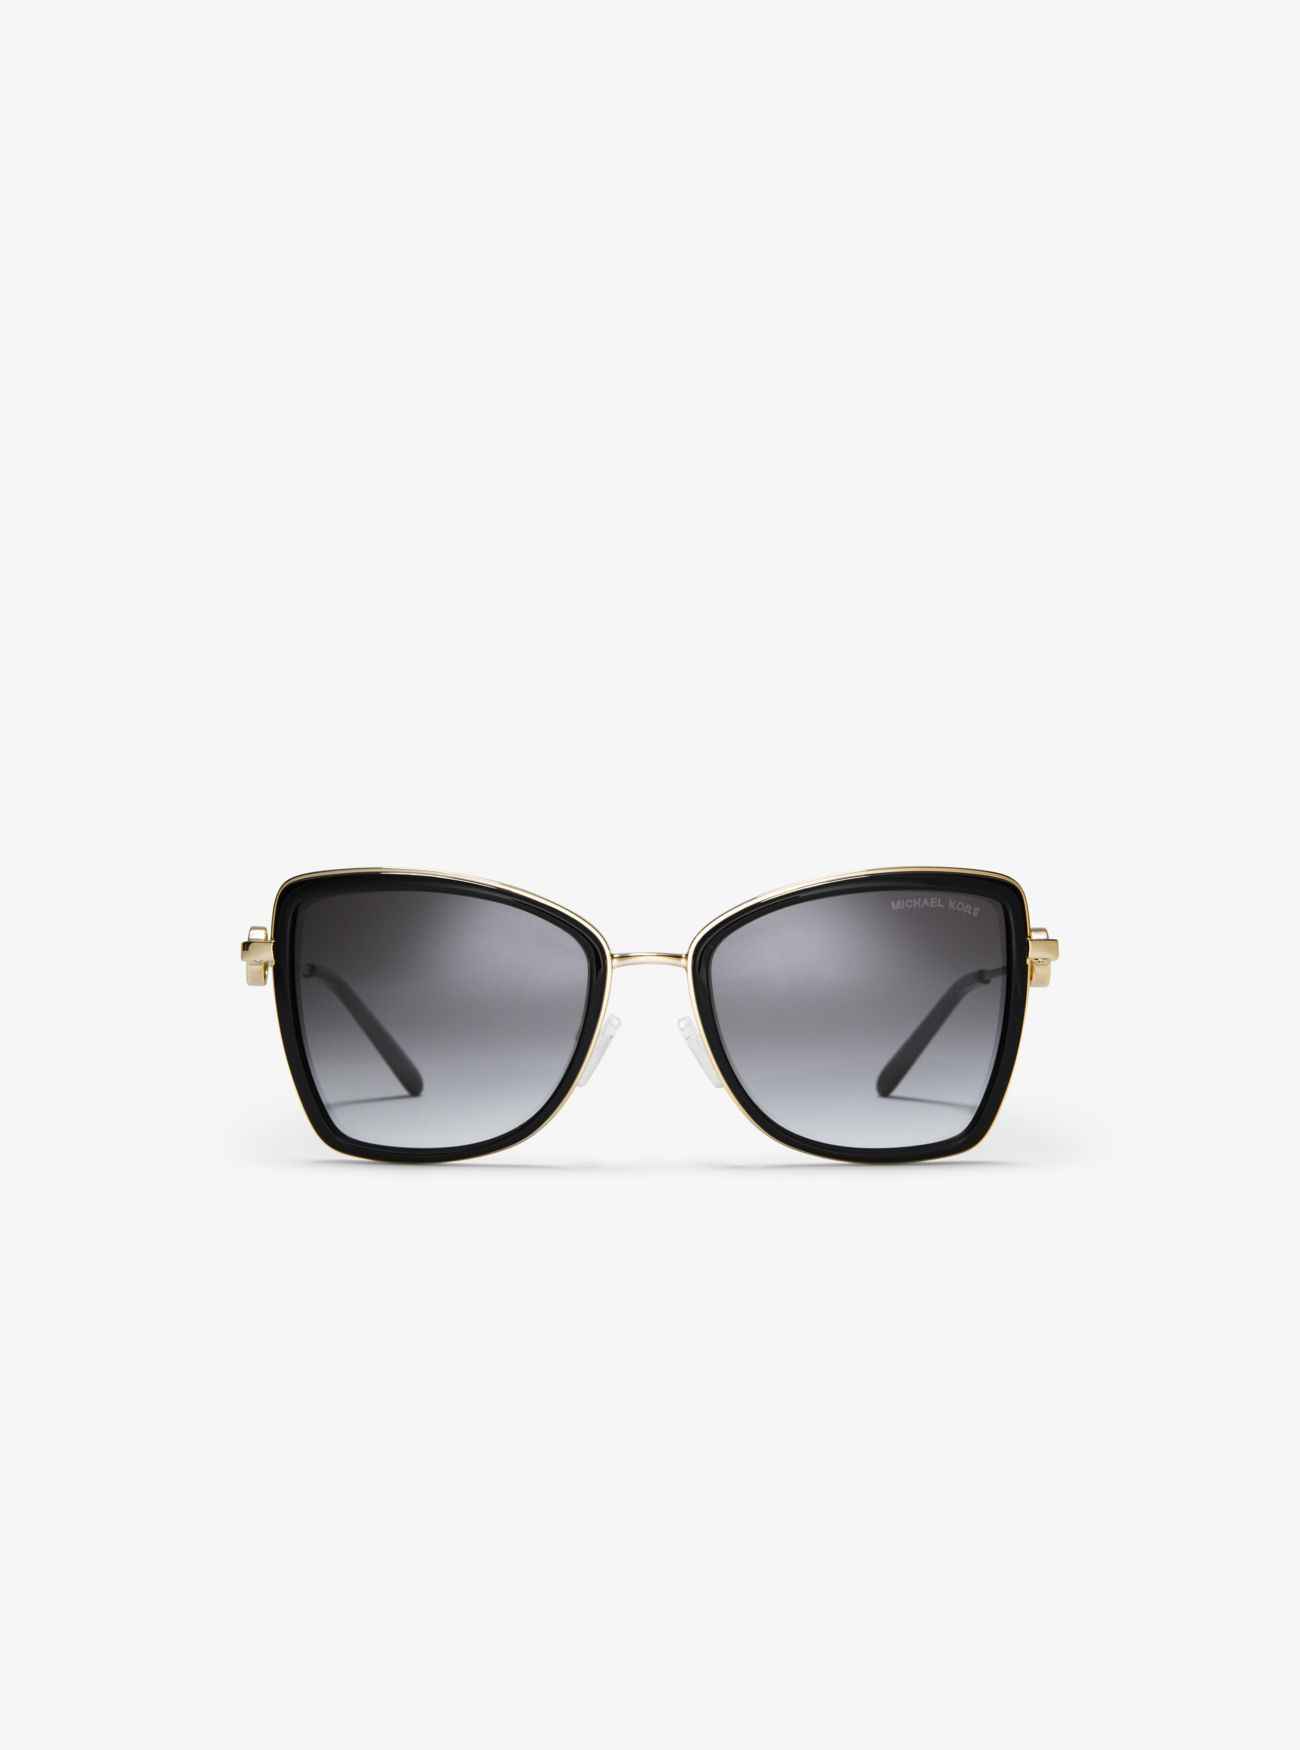 MK Corsica Sunglasses - Gold - Michael Kors